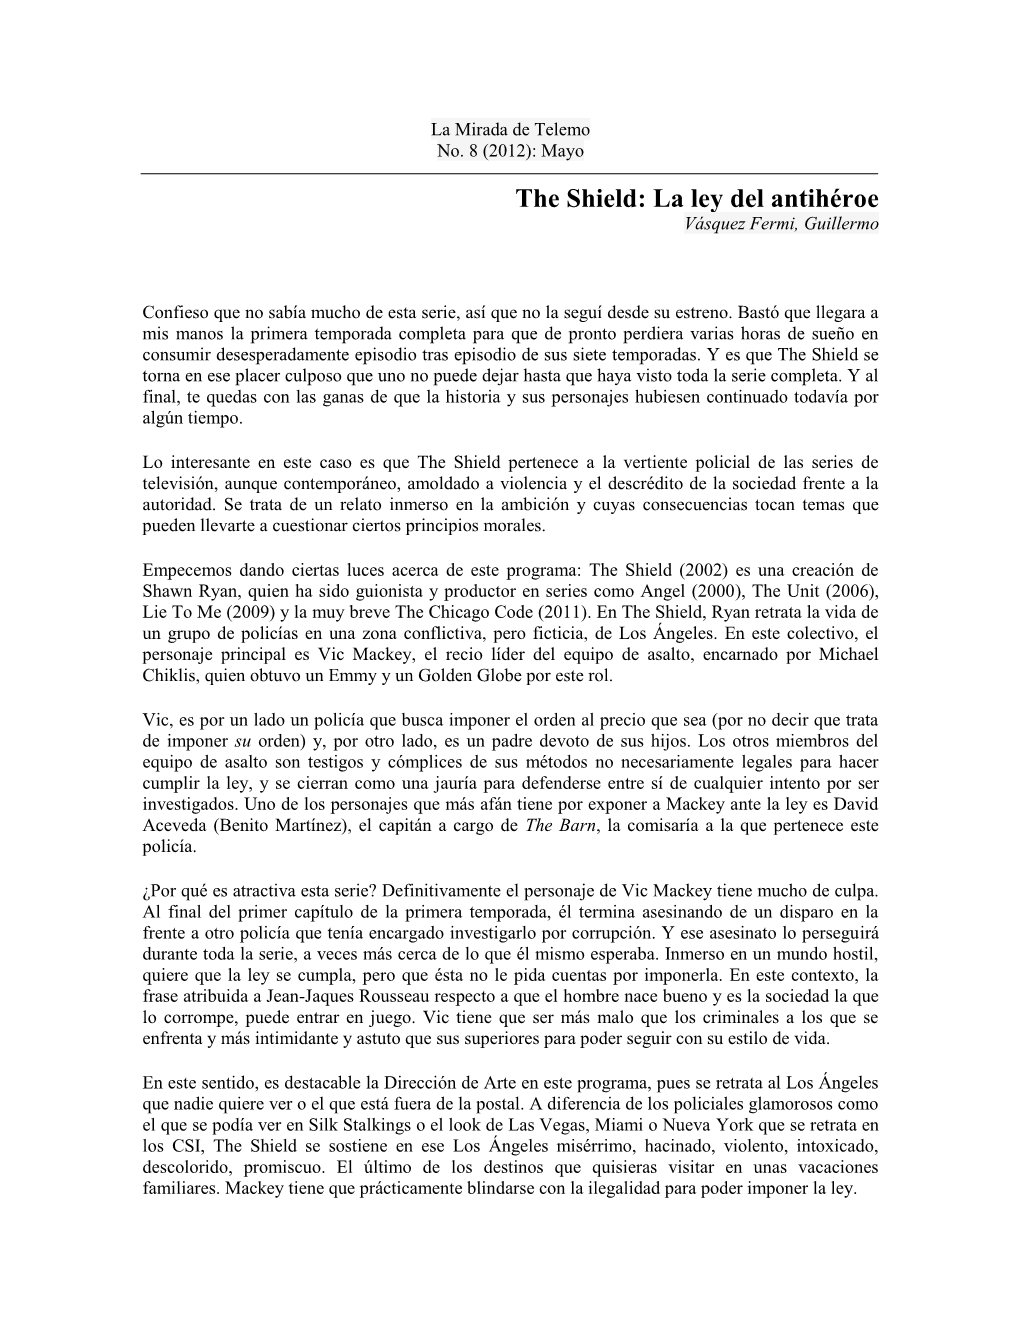 The Shield: La Ley Del Antihéroe Vásquez Fermi, Guillermo